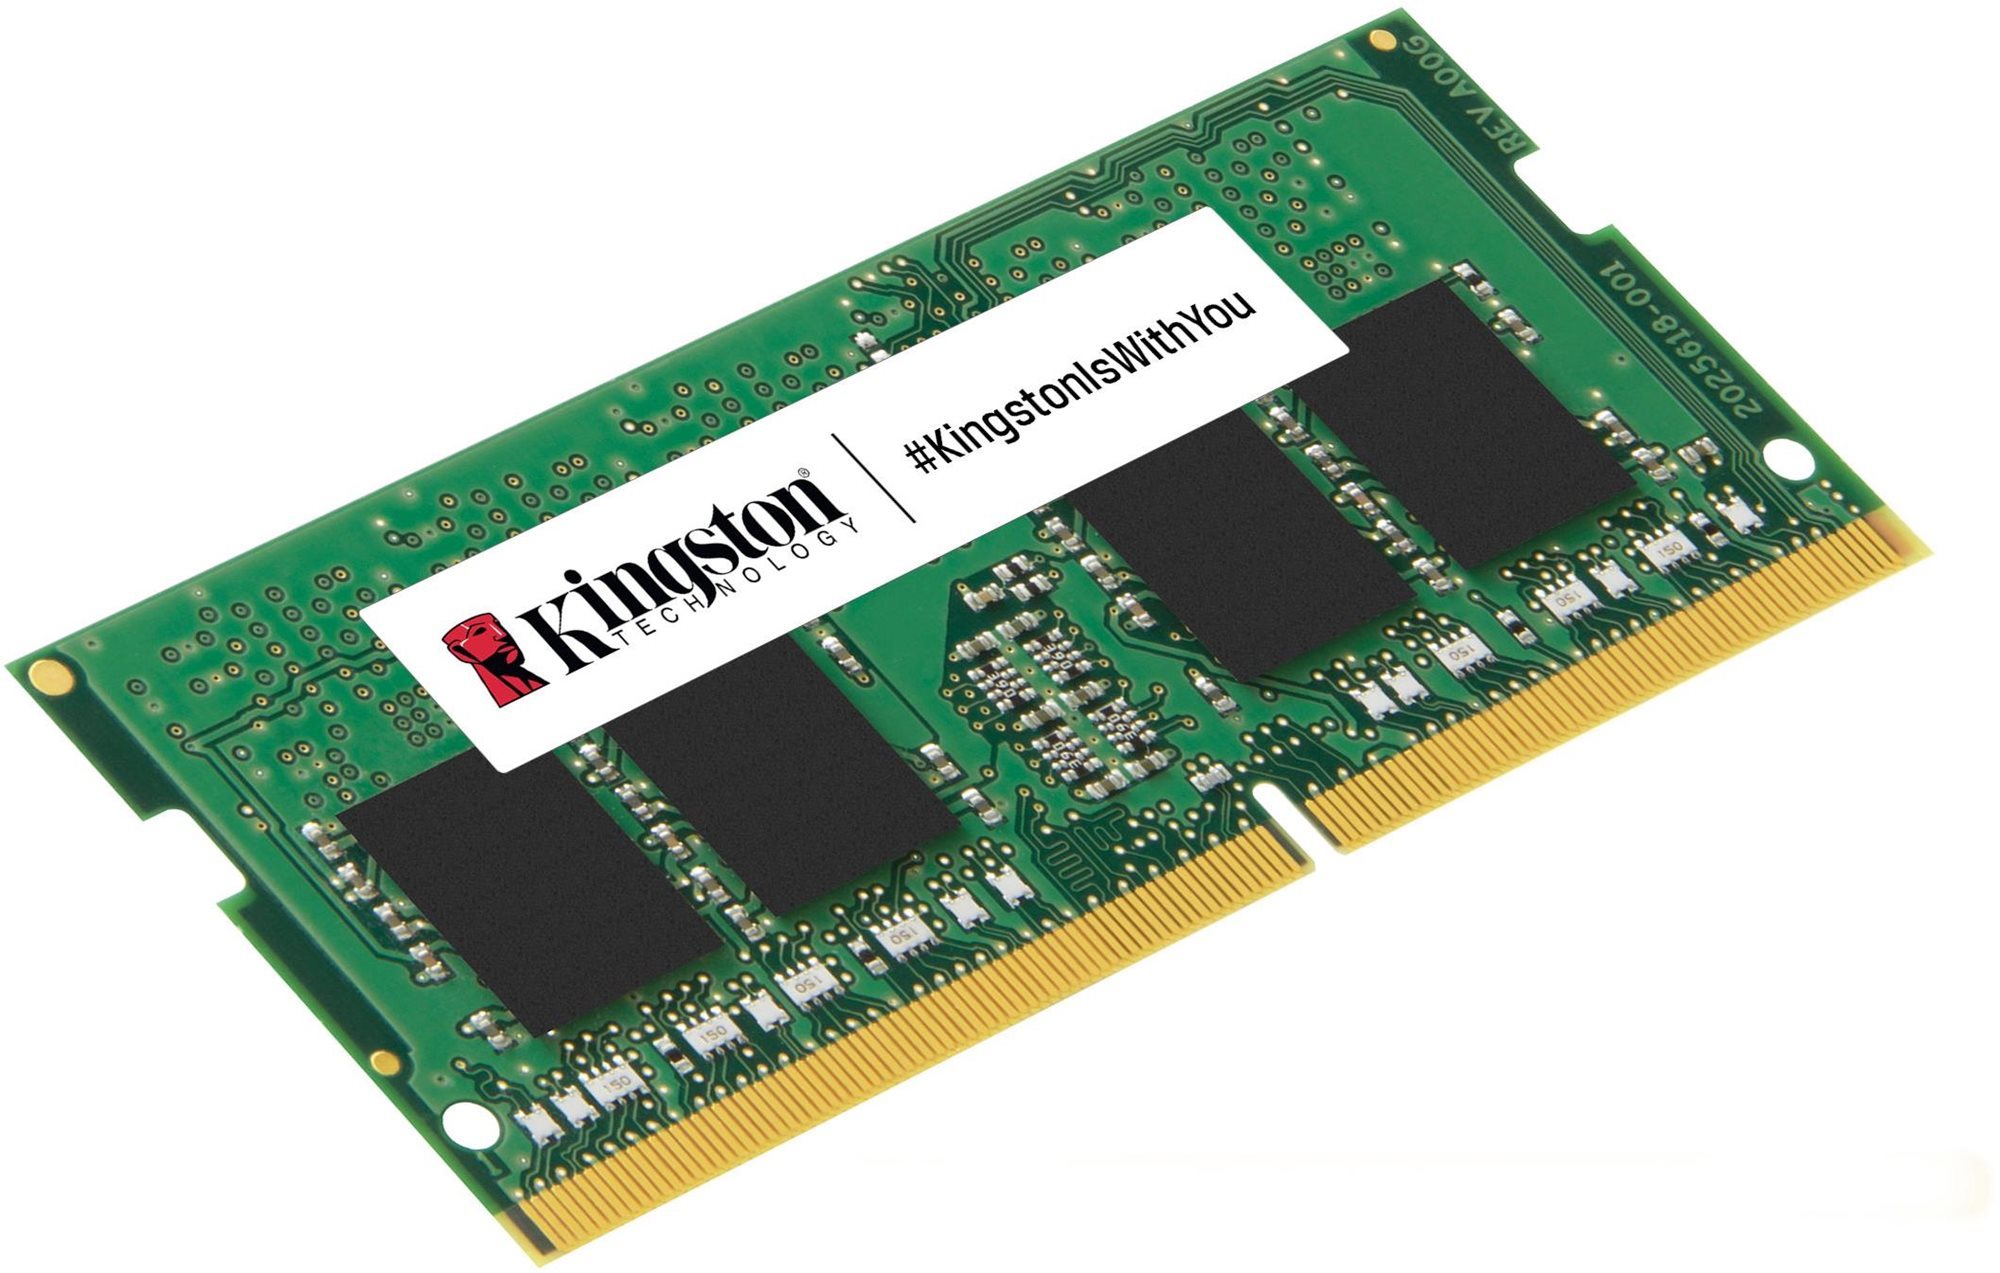 RAM memória Kingston SO-DIMM 8GB DDR4 2666MHz CL19 Single Rank x8